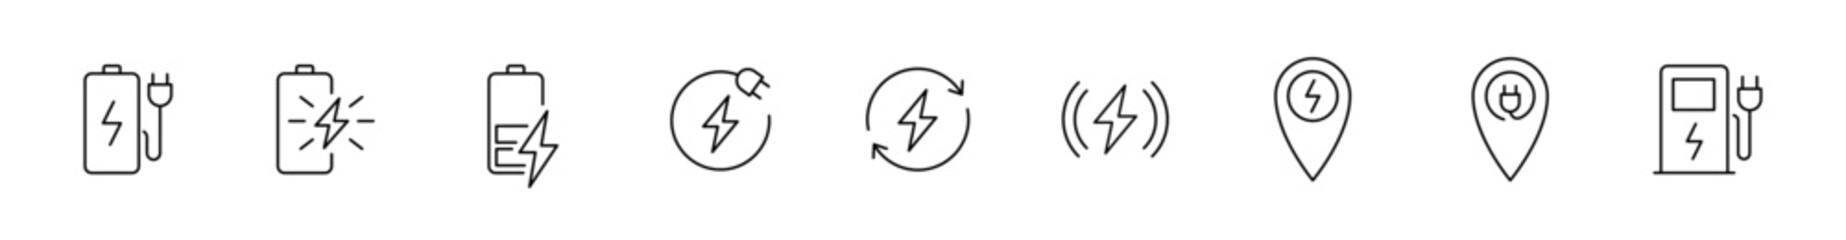 Charging battery icon set. Charging station sign. Lightning, plug, accumulator, station. EPS 10